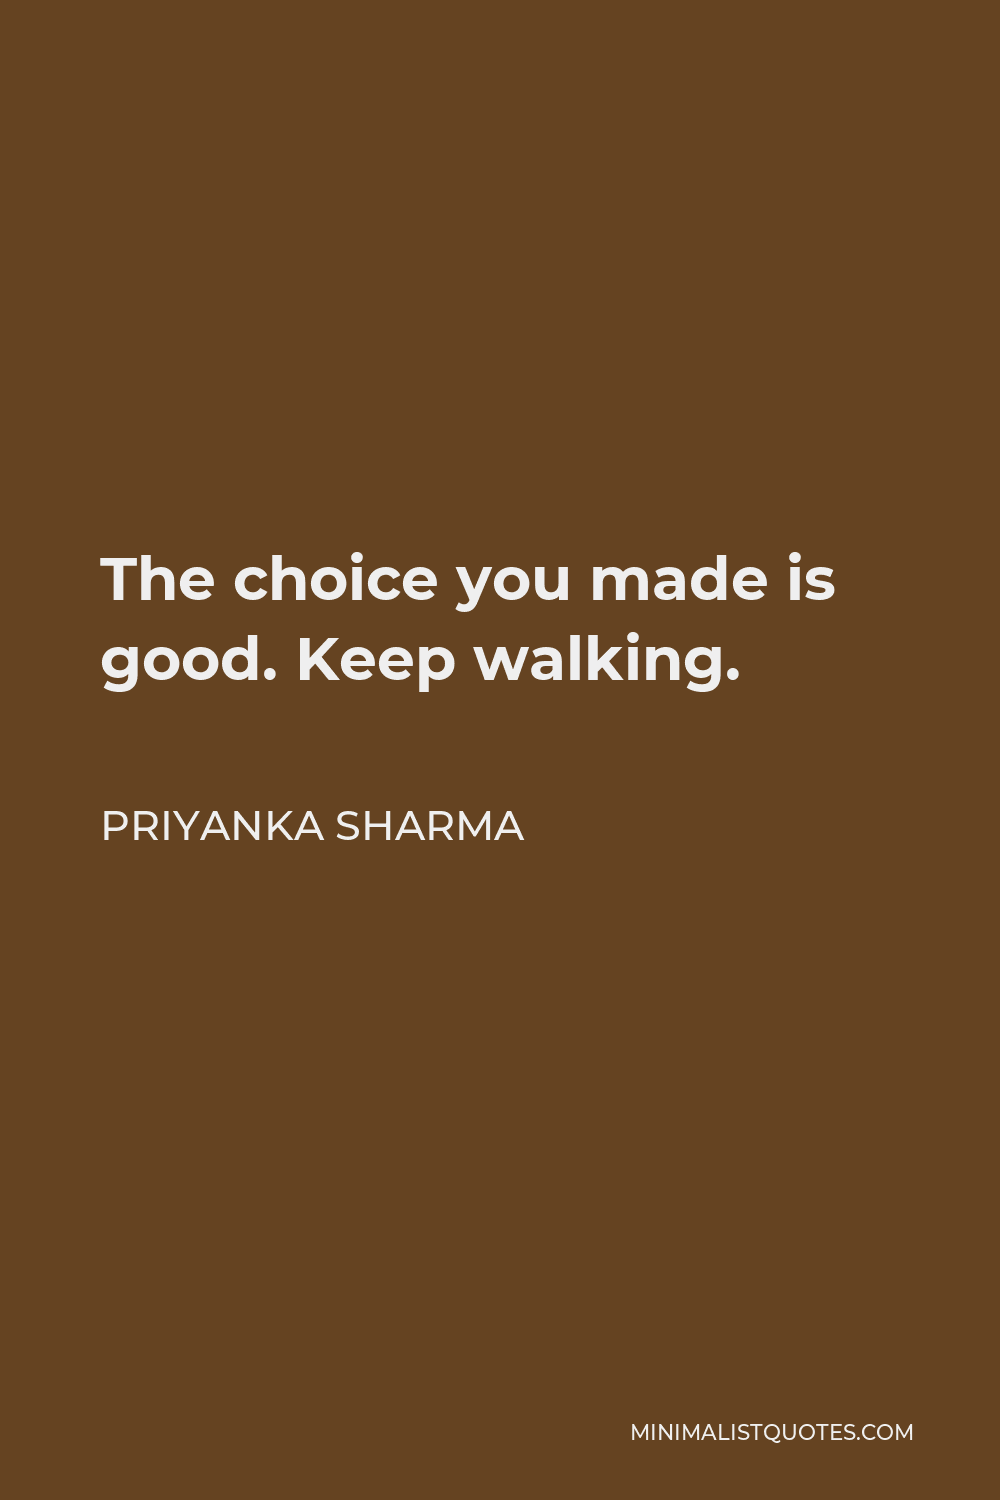 Priyanka Sharma Quote - The choice you made is good. Keep walking.